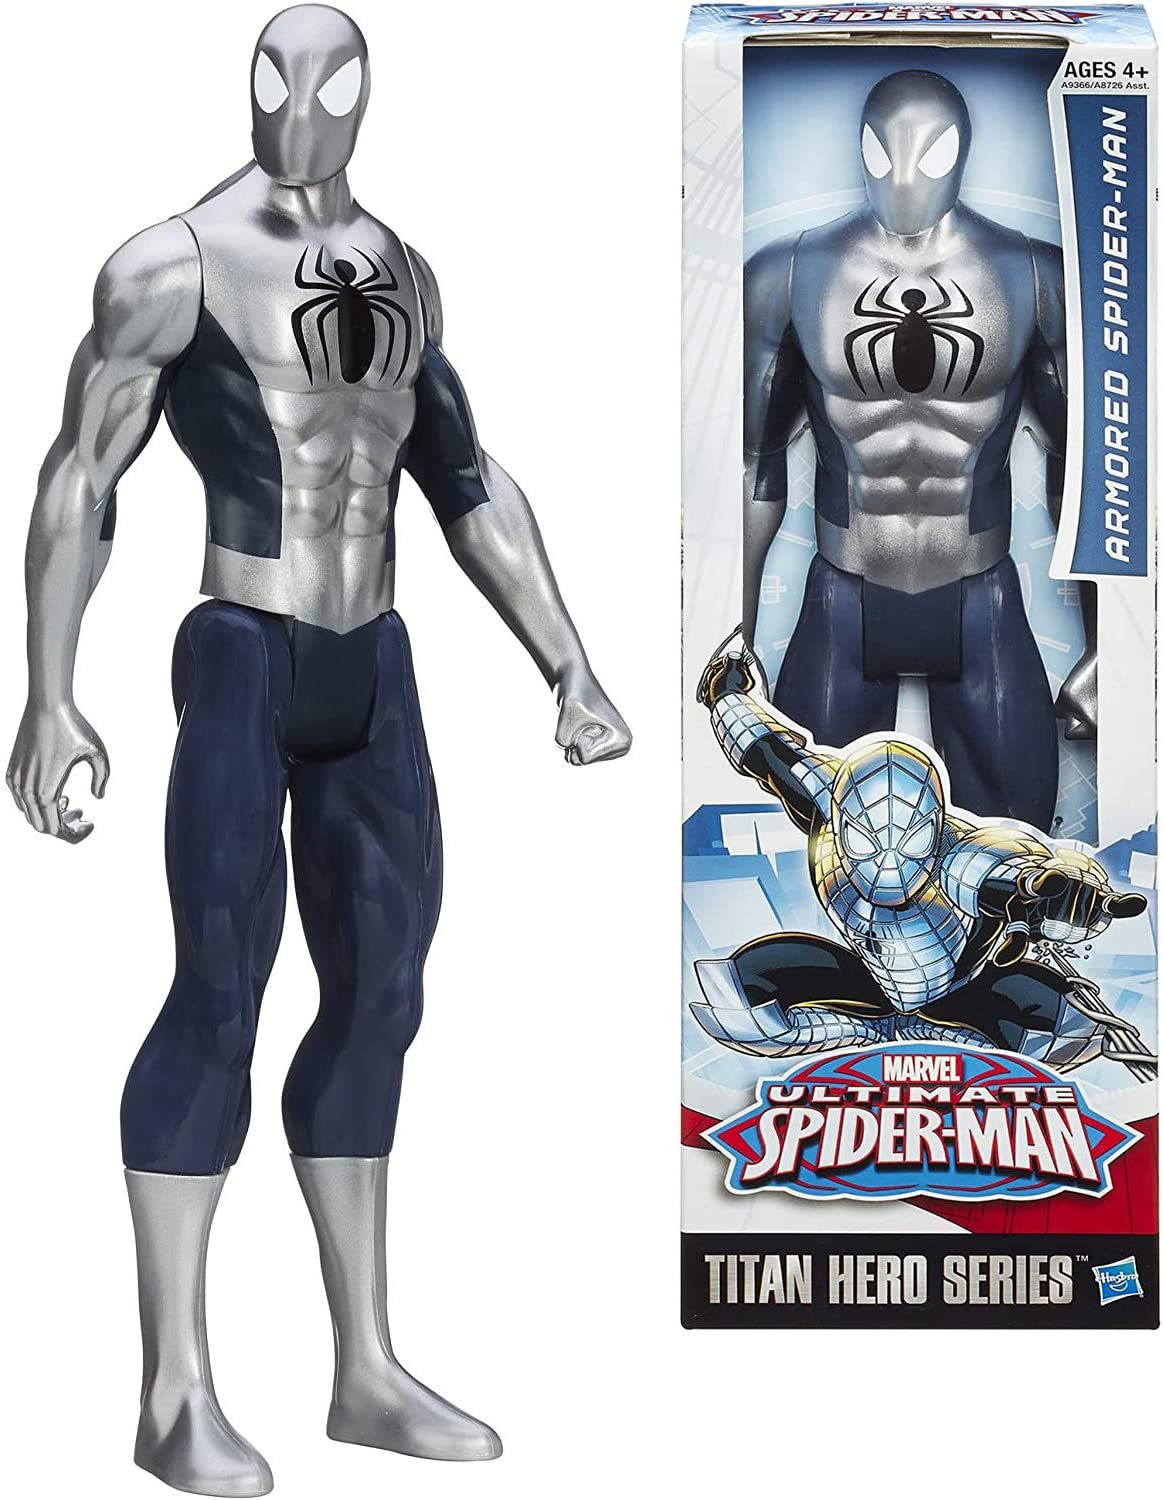 Titan Hero Series Ultimate Spider-Man 12 Inch Action Figure (Silver) Setup  confi guration D0898 - ToysChoose